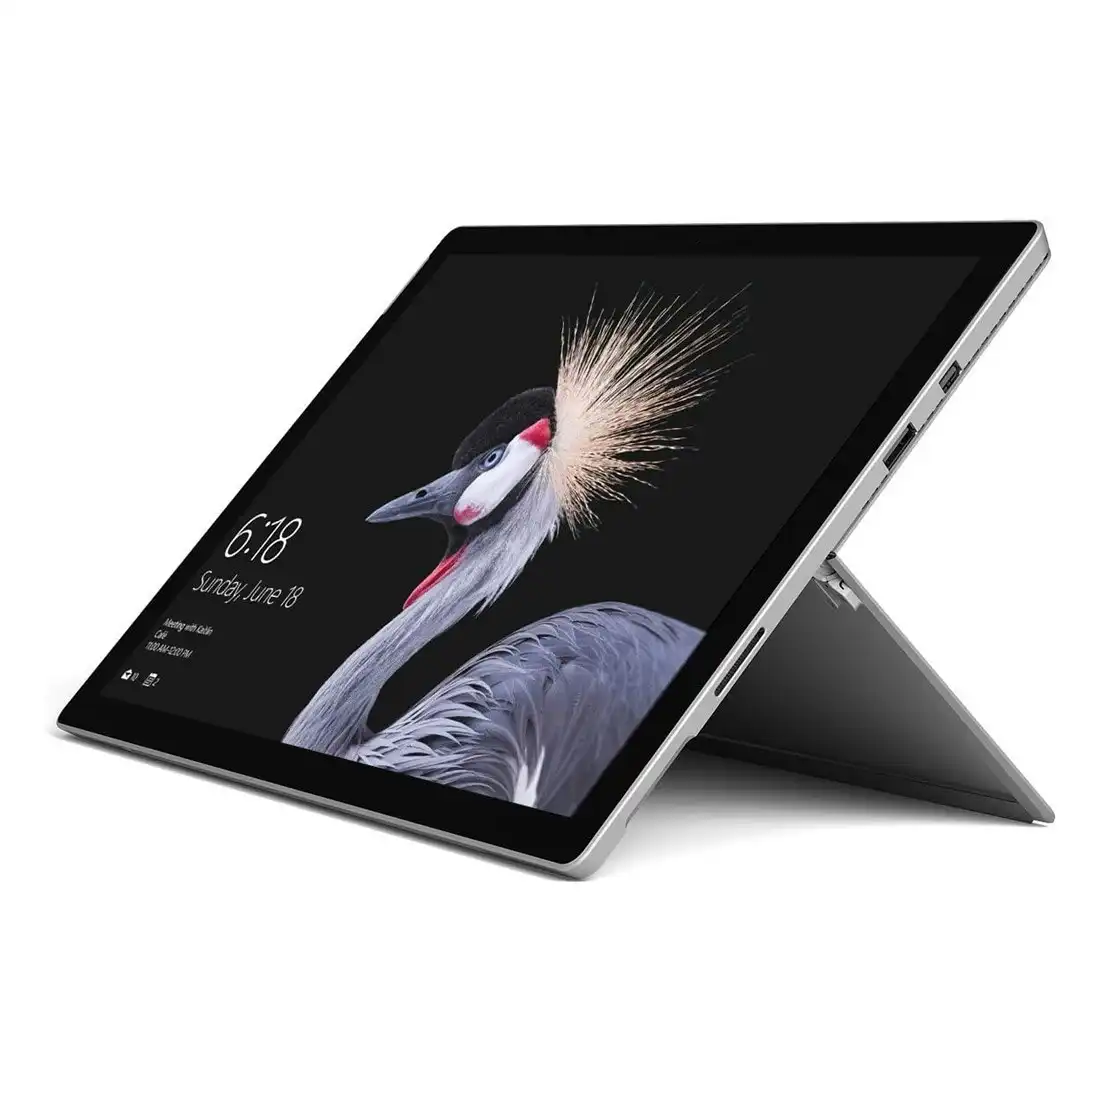 Microsoft Surface Pro (5th Gen, LTE, i5, 256GB/8GB) -  Platinum